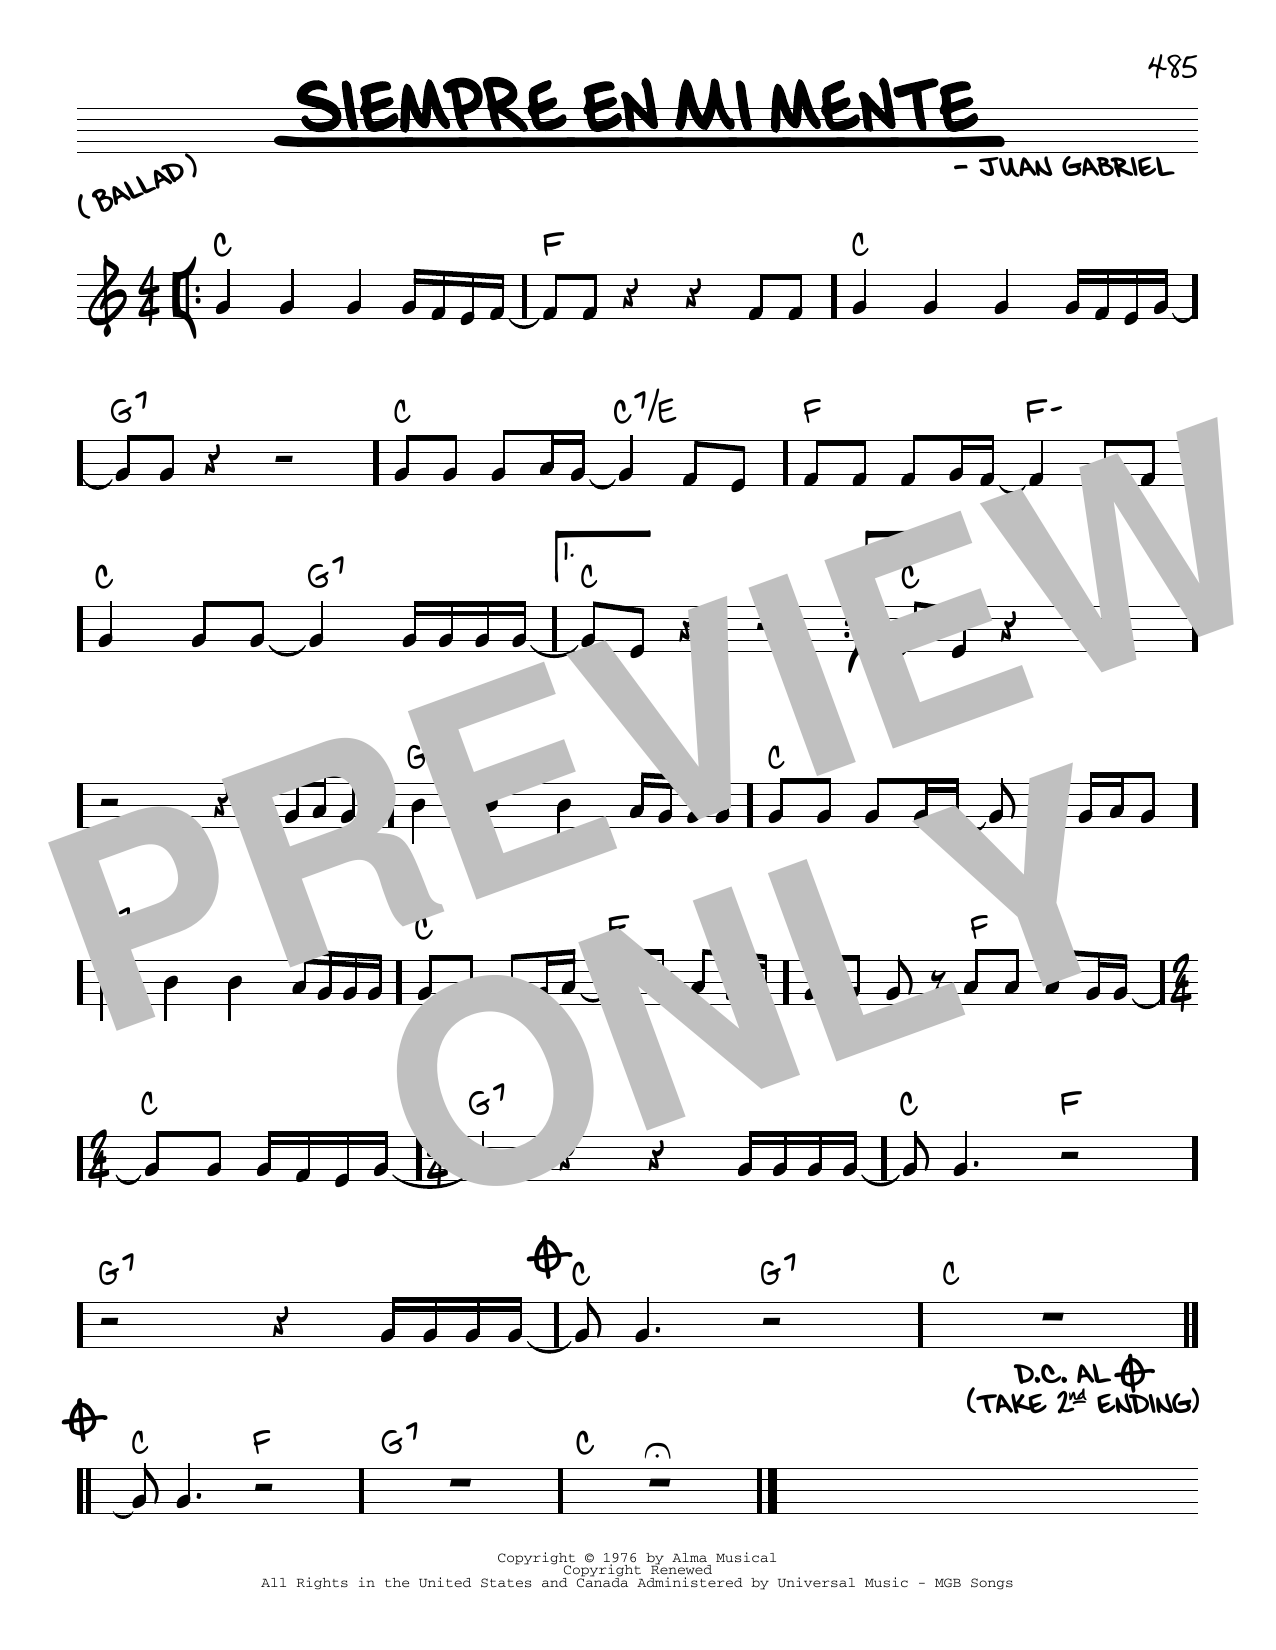 Juan Gabriel Siempre En Mi Mente Sheet Music Notes & Chords for Real Book – Melody & Chords - Download or Print PDF